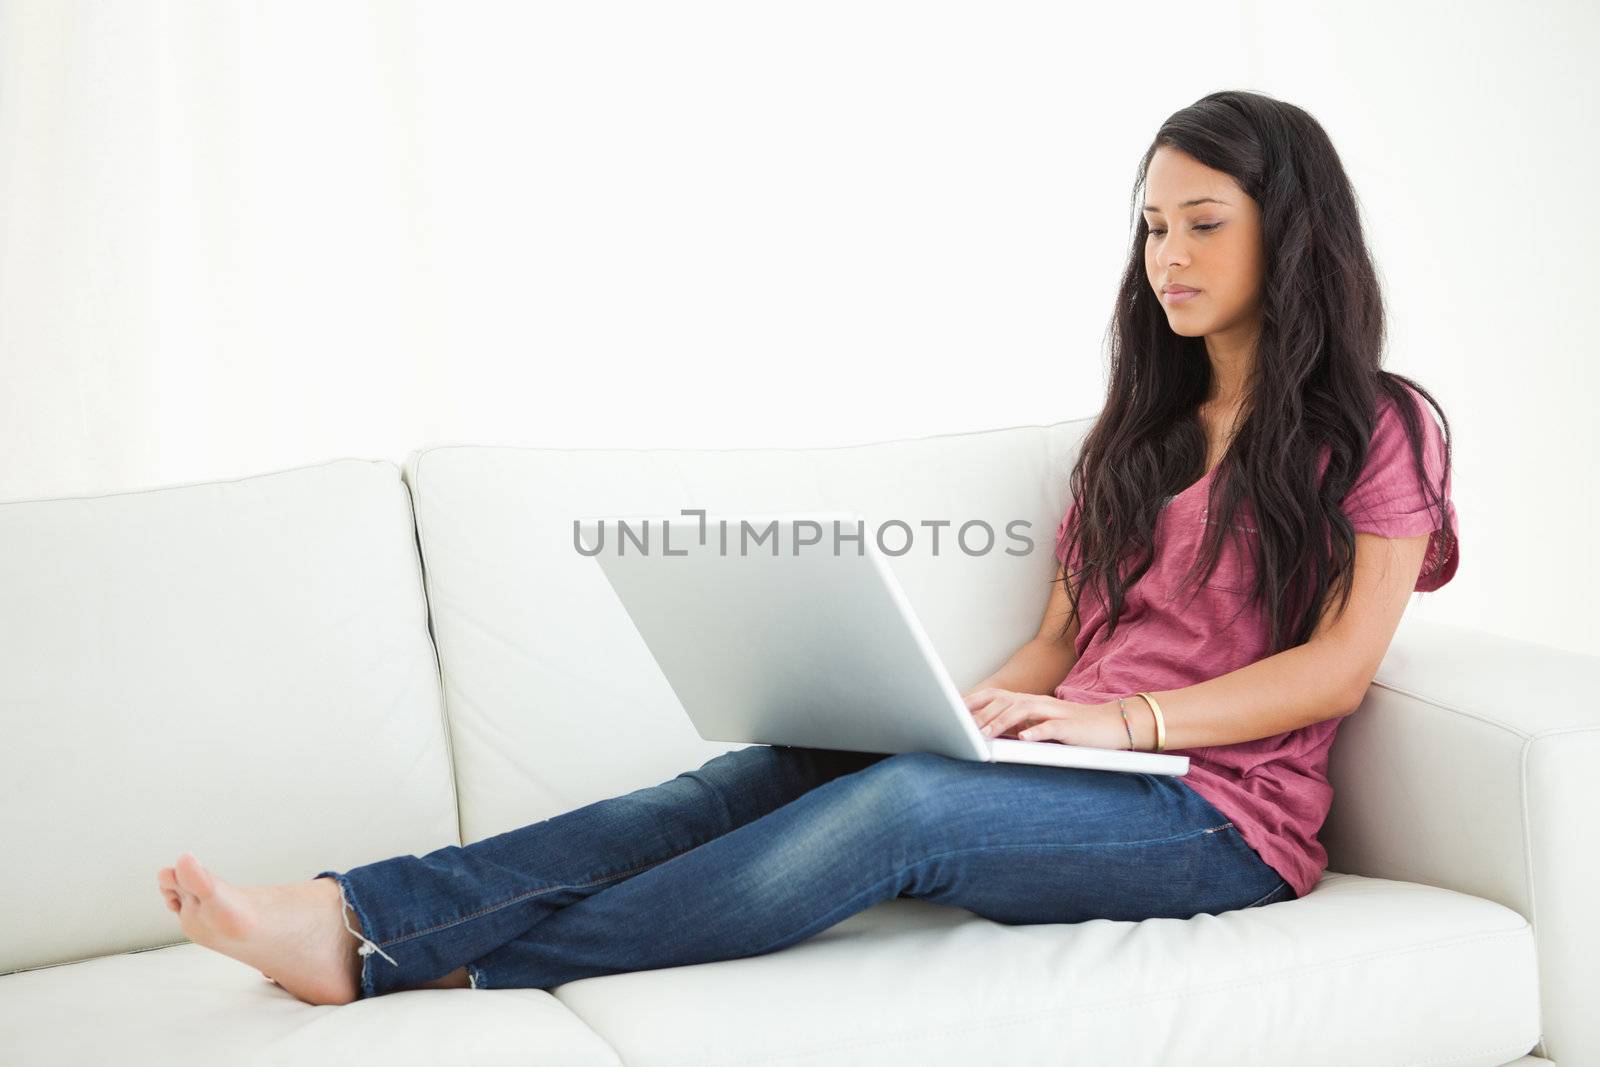 Unsmiling Latino student sitting on a sofa by Wavebreakmedia